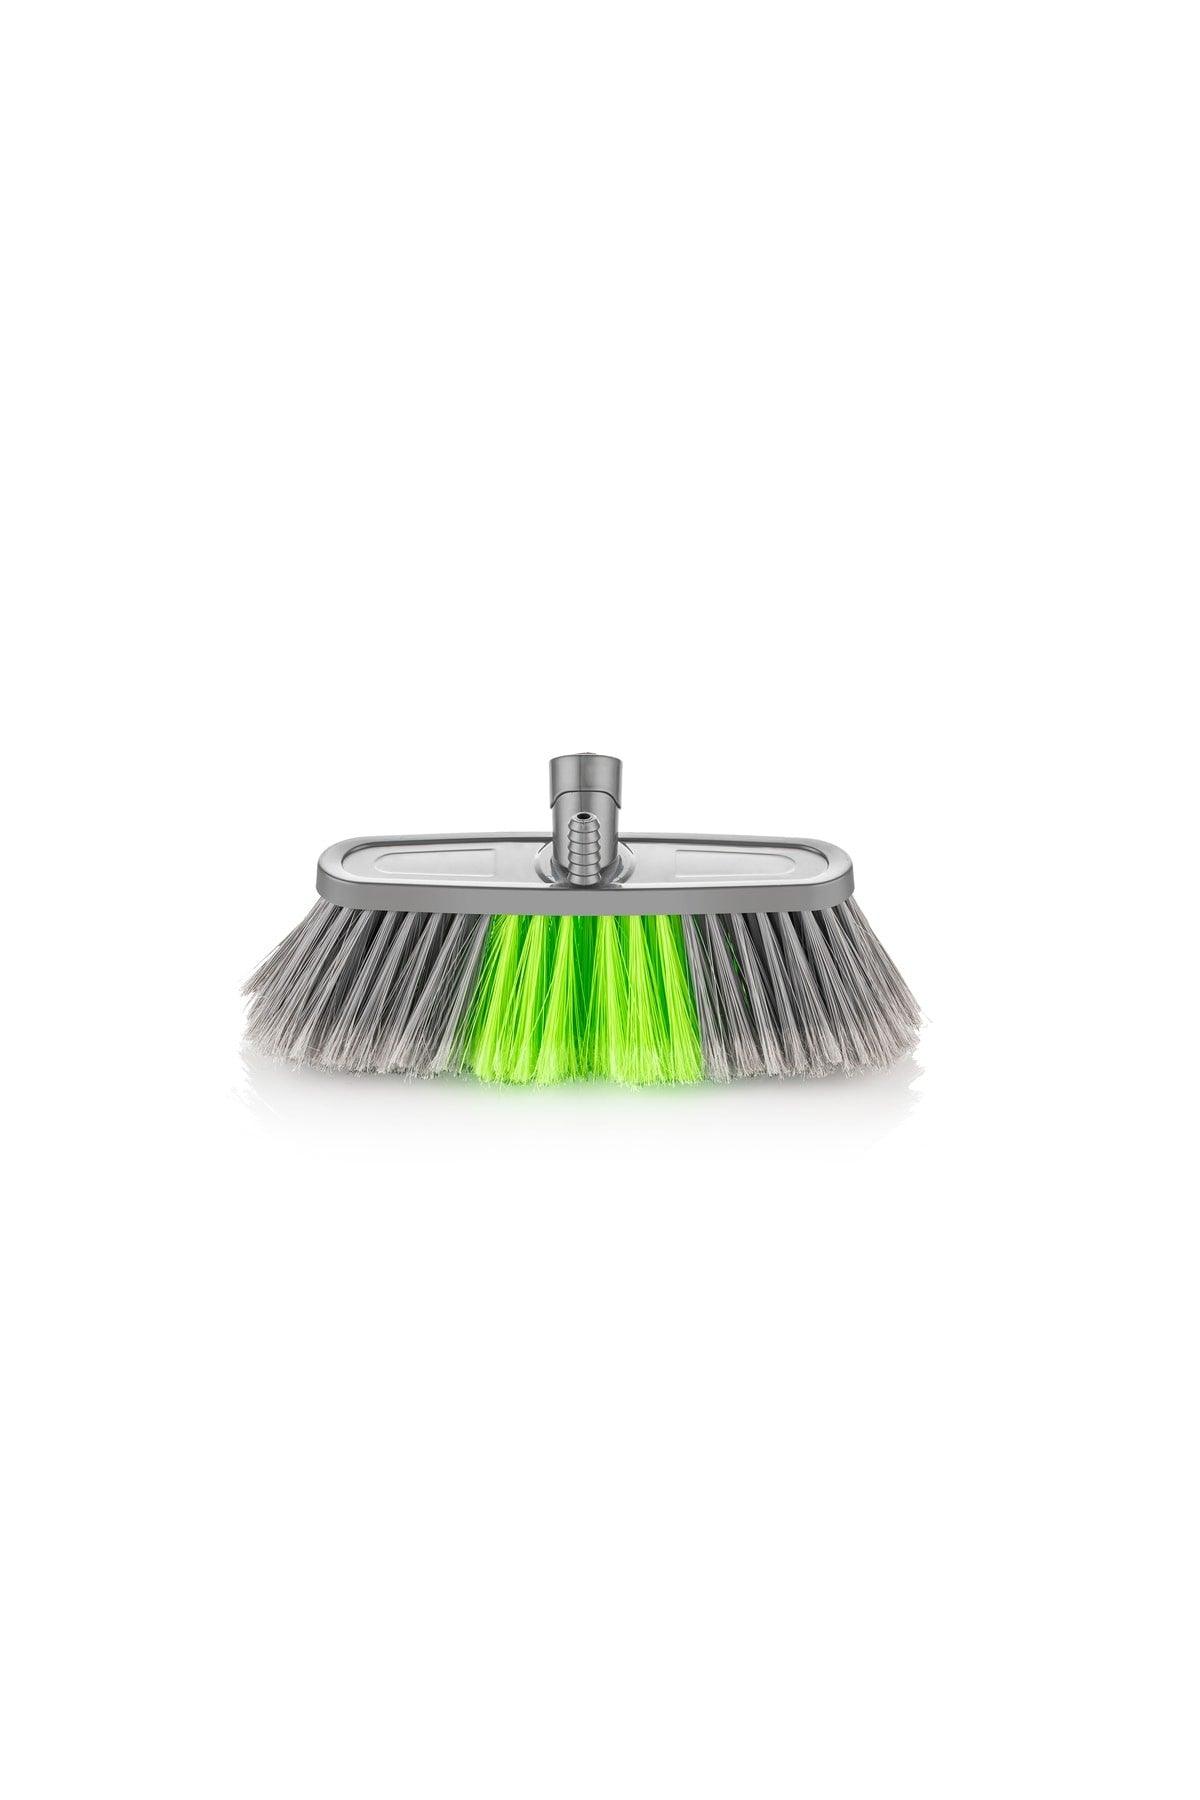 Car Brush - Green Floor Brush Vacuum Cleaner 15 Cm. Eh-500 - Swordslife